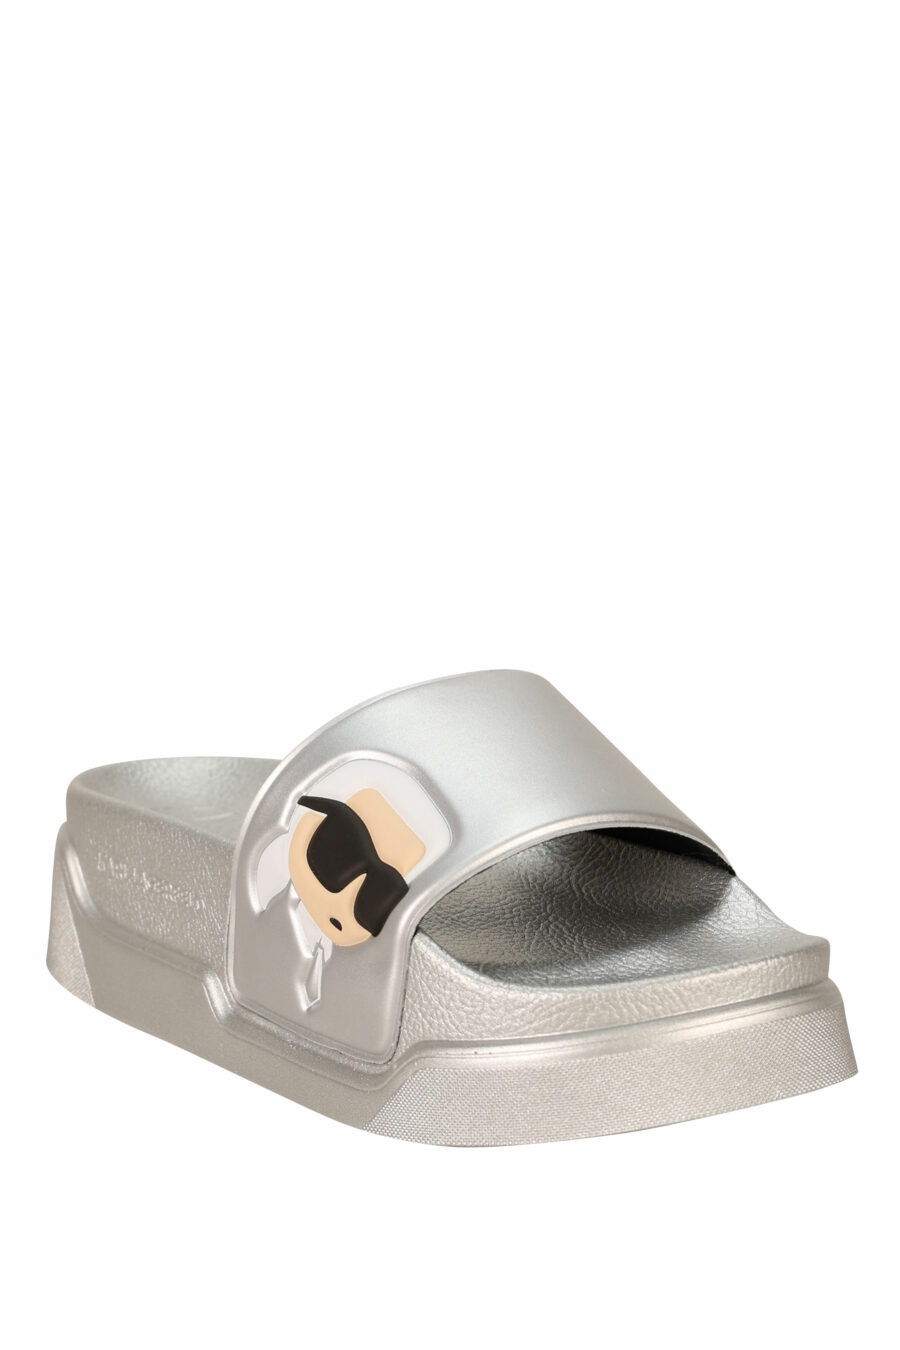 Silver platform sandals with "karl" logo - 5059529404849 1